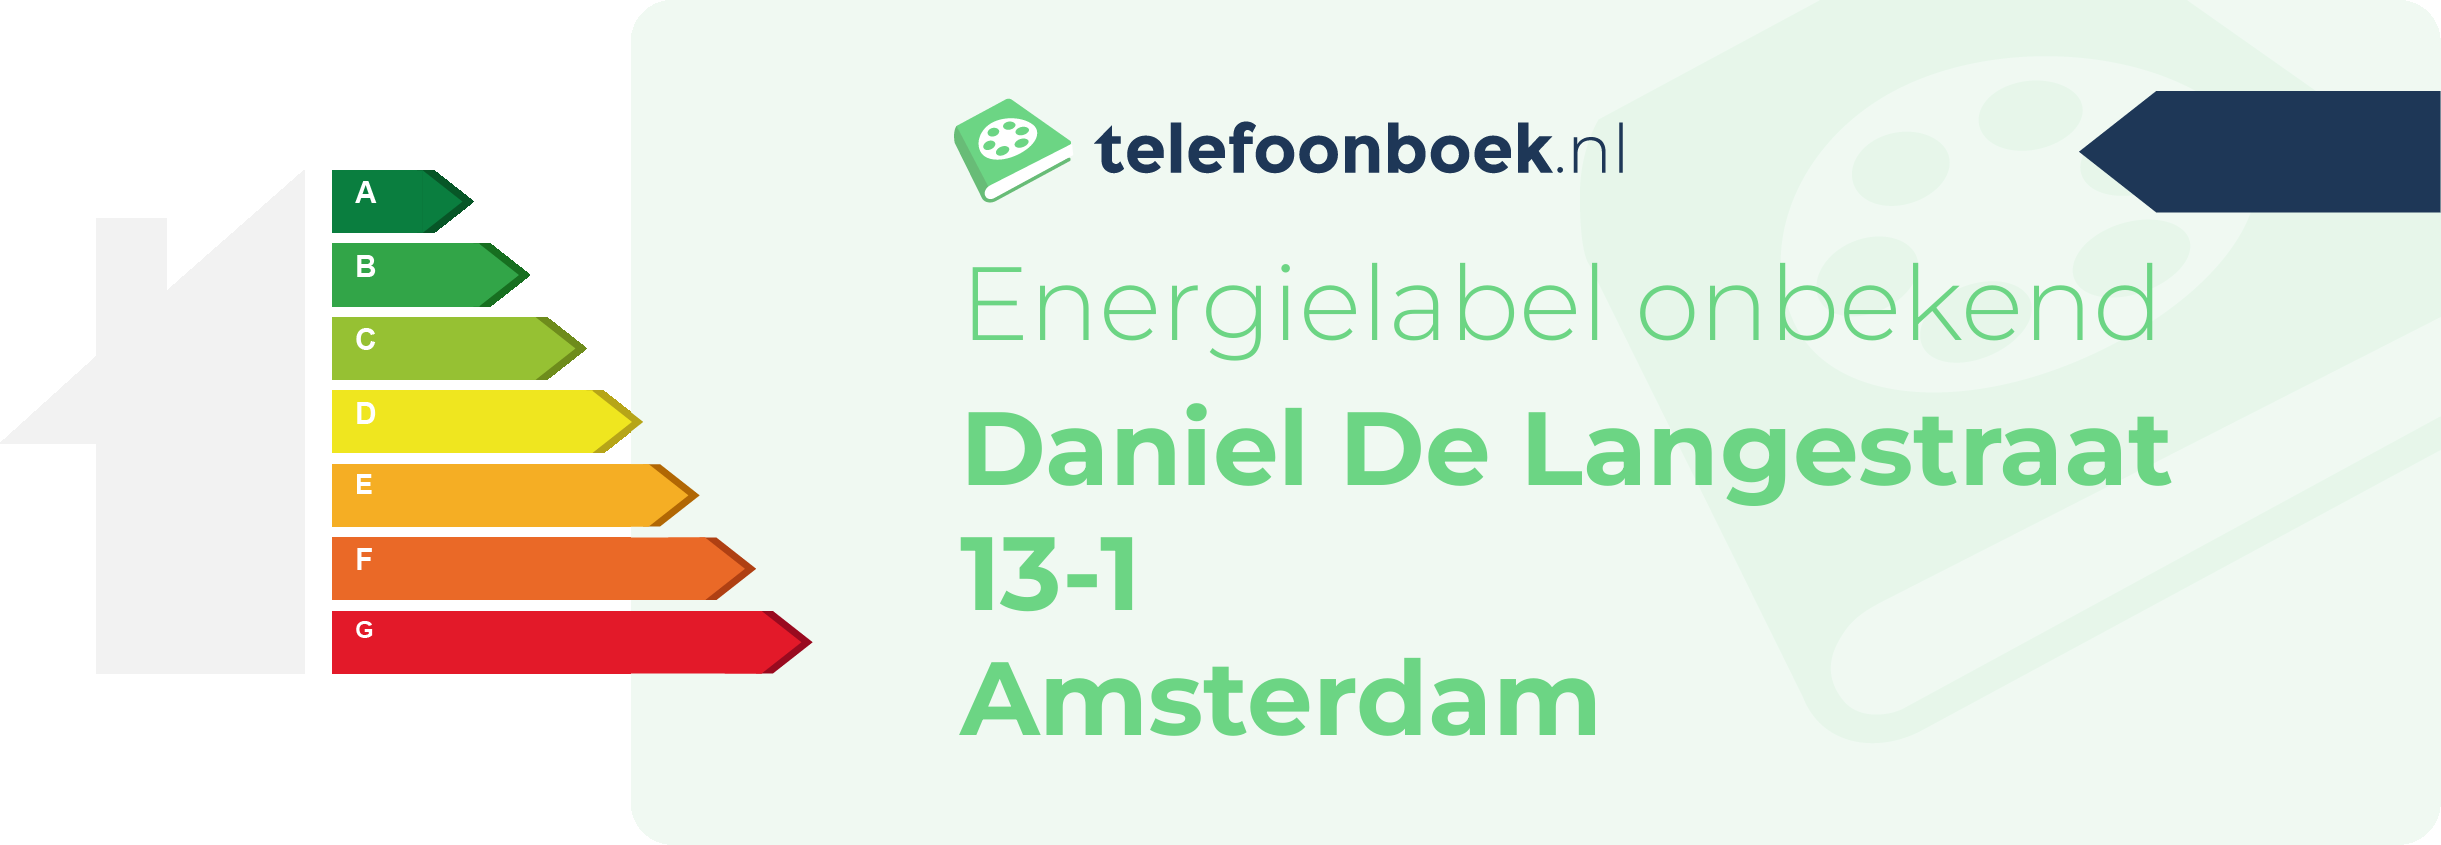 Energielabel Daniel De Langestraat 13-1 Amsterdam